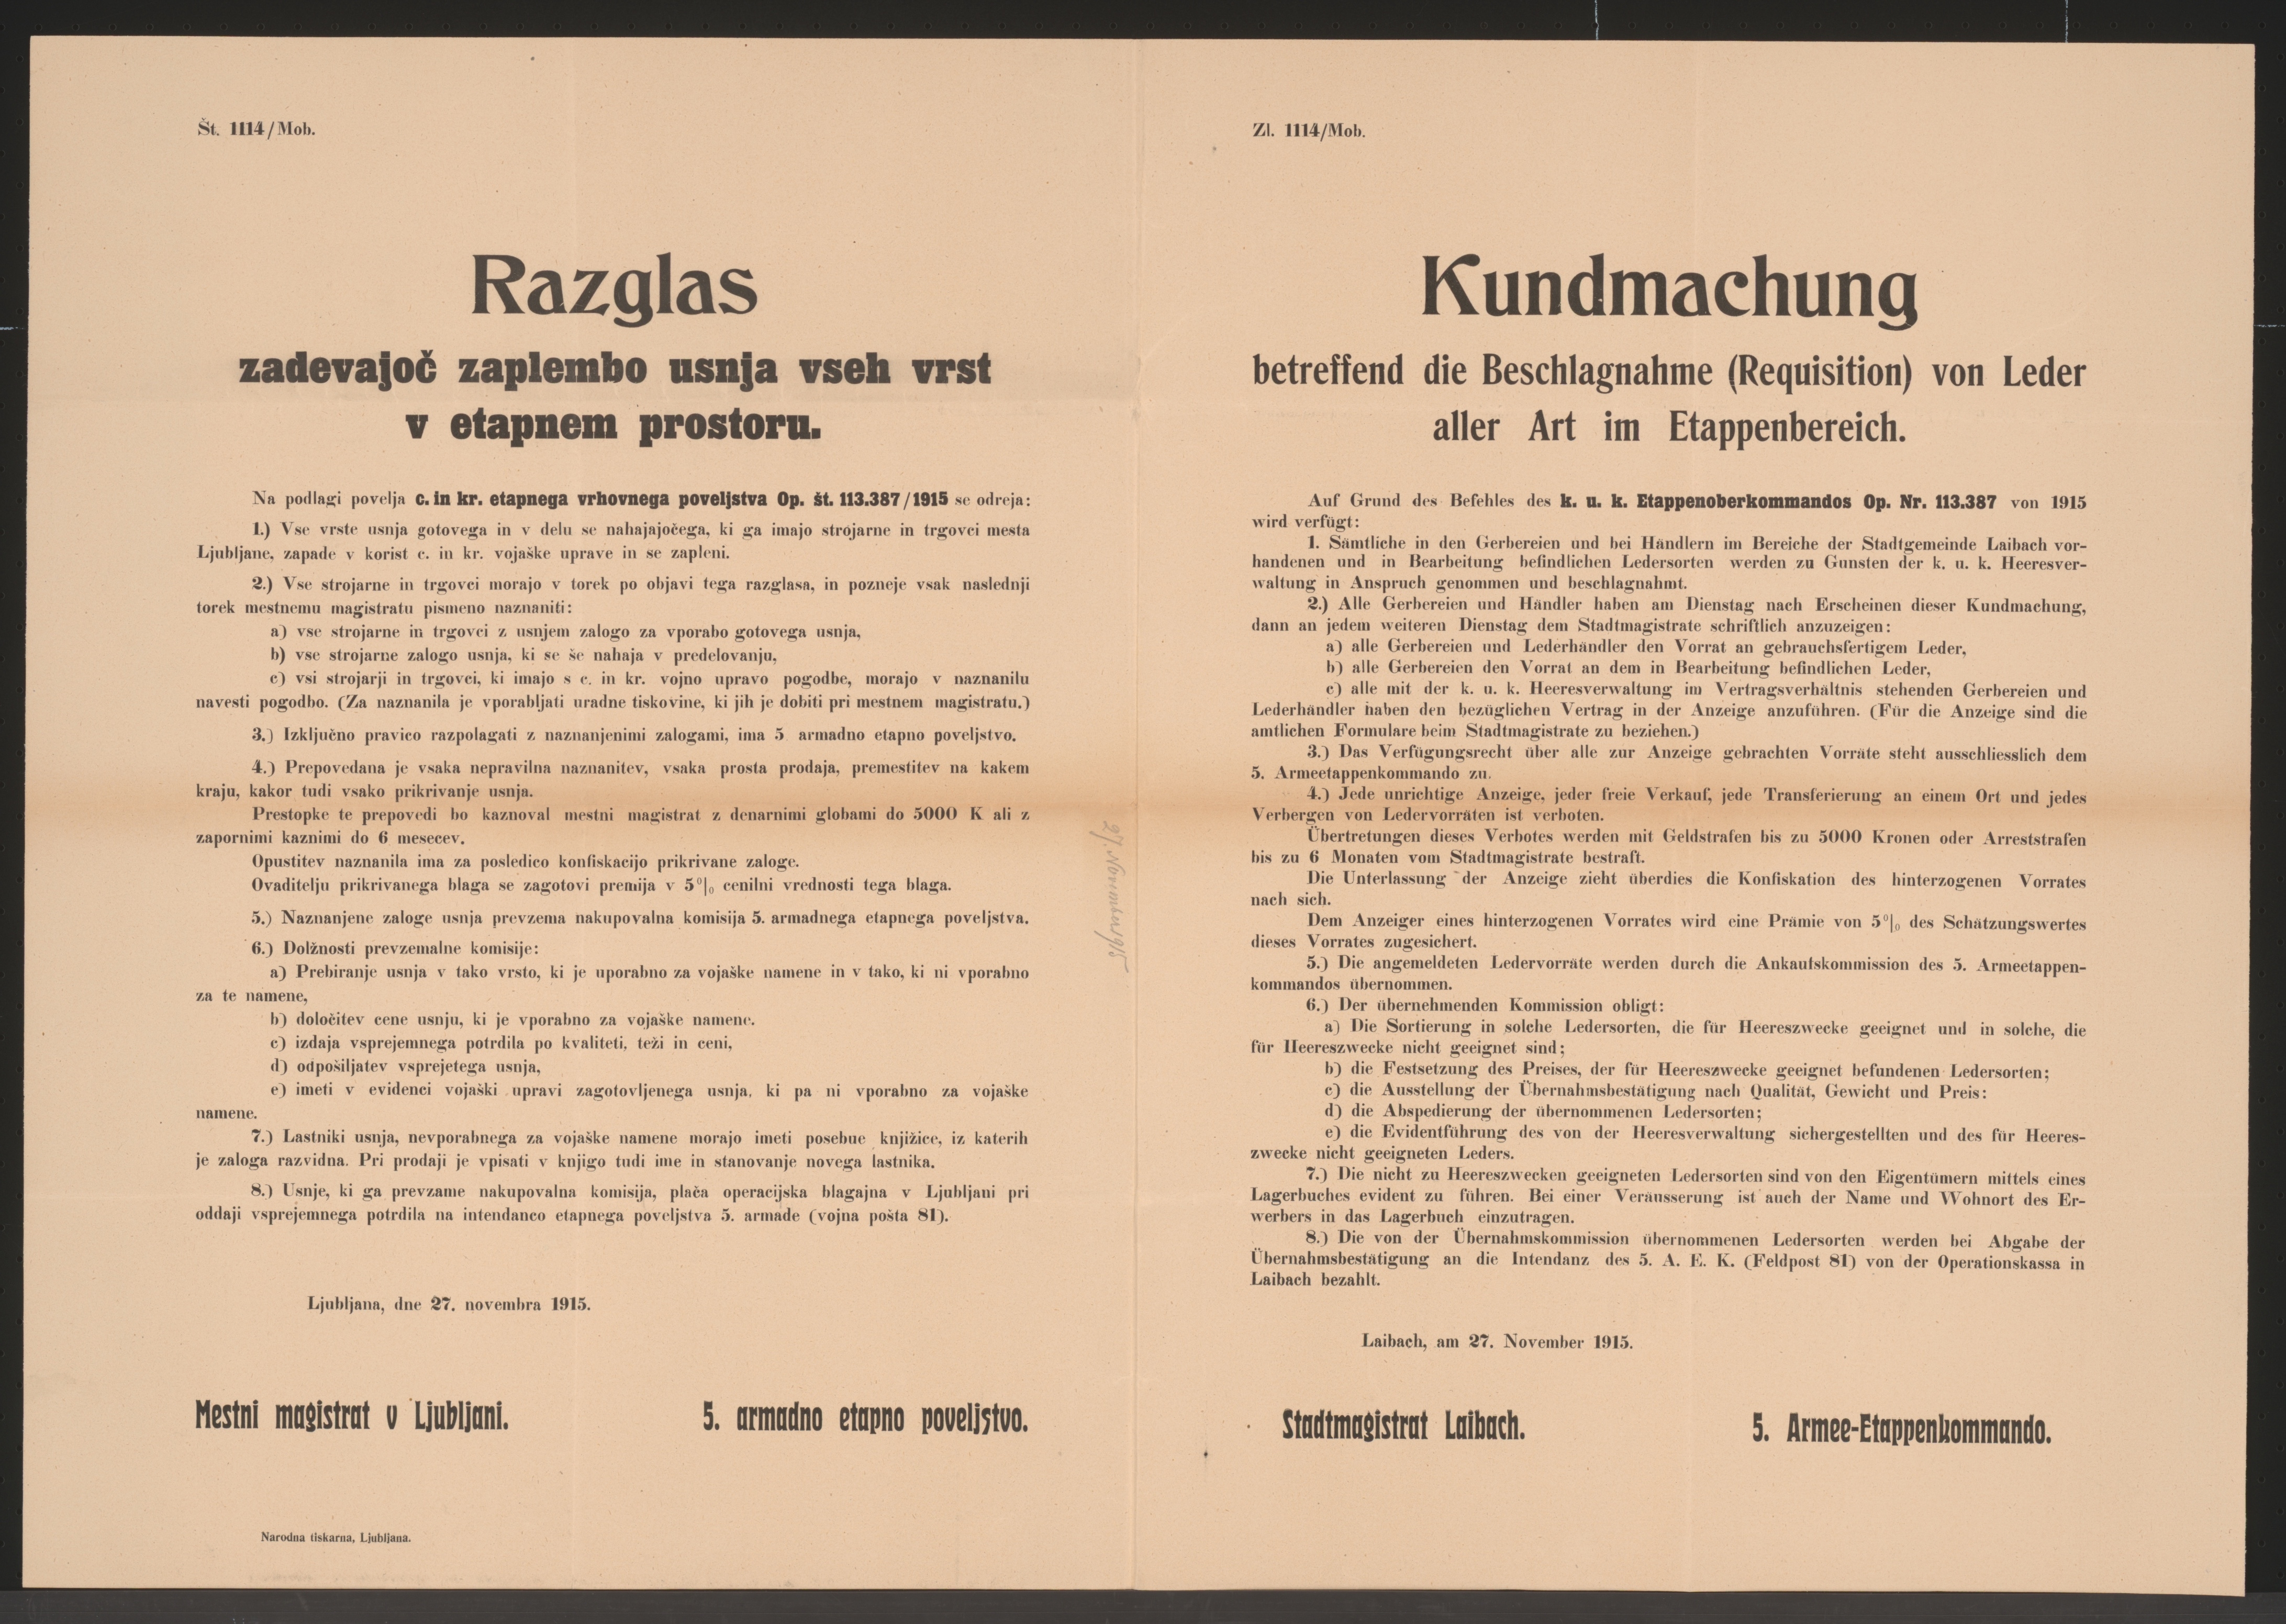 File:Requisition Leder - Kundmachung - Laibach Mehrsprachiges Plakat 1915.jpg - Wikimedia